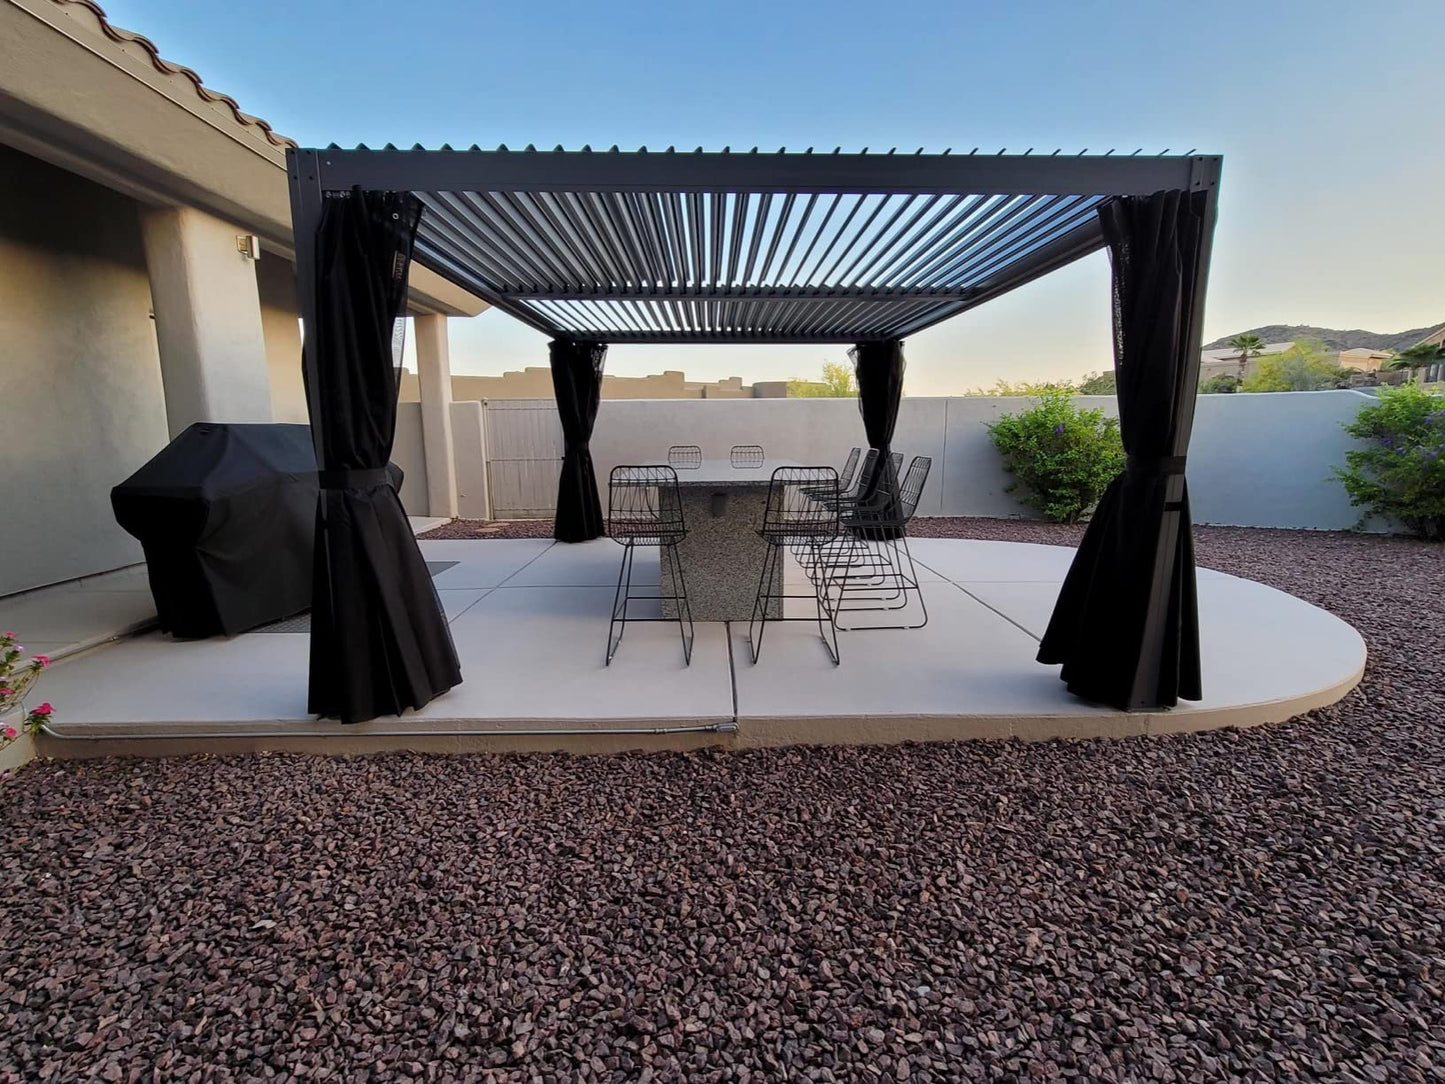 Domi Louvered Pergola 10' × 13', Outdoor Aluminium Pergola with Adjustable Roof, Curtains and Netting, Hardtop Gazebo for Patio, Deck, Garden, Yard, Beach(Gray)